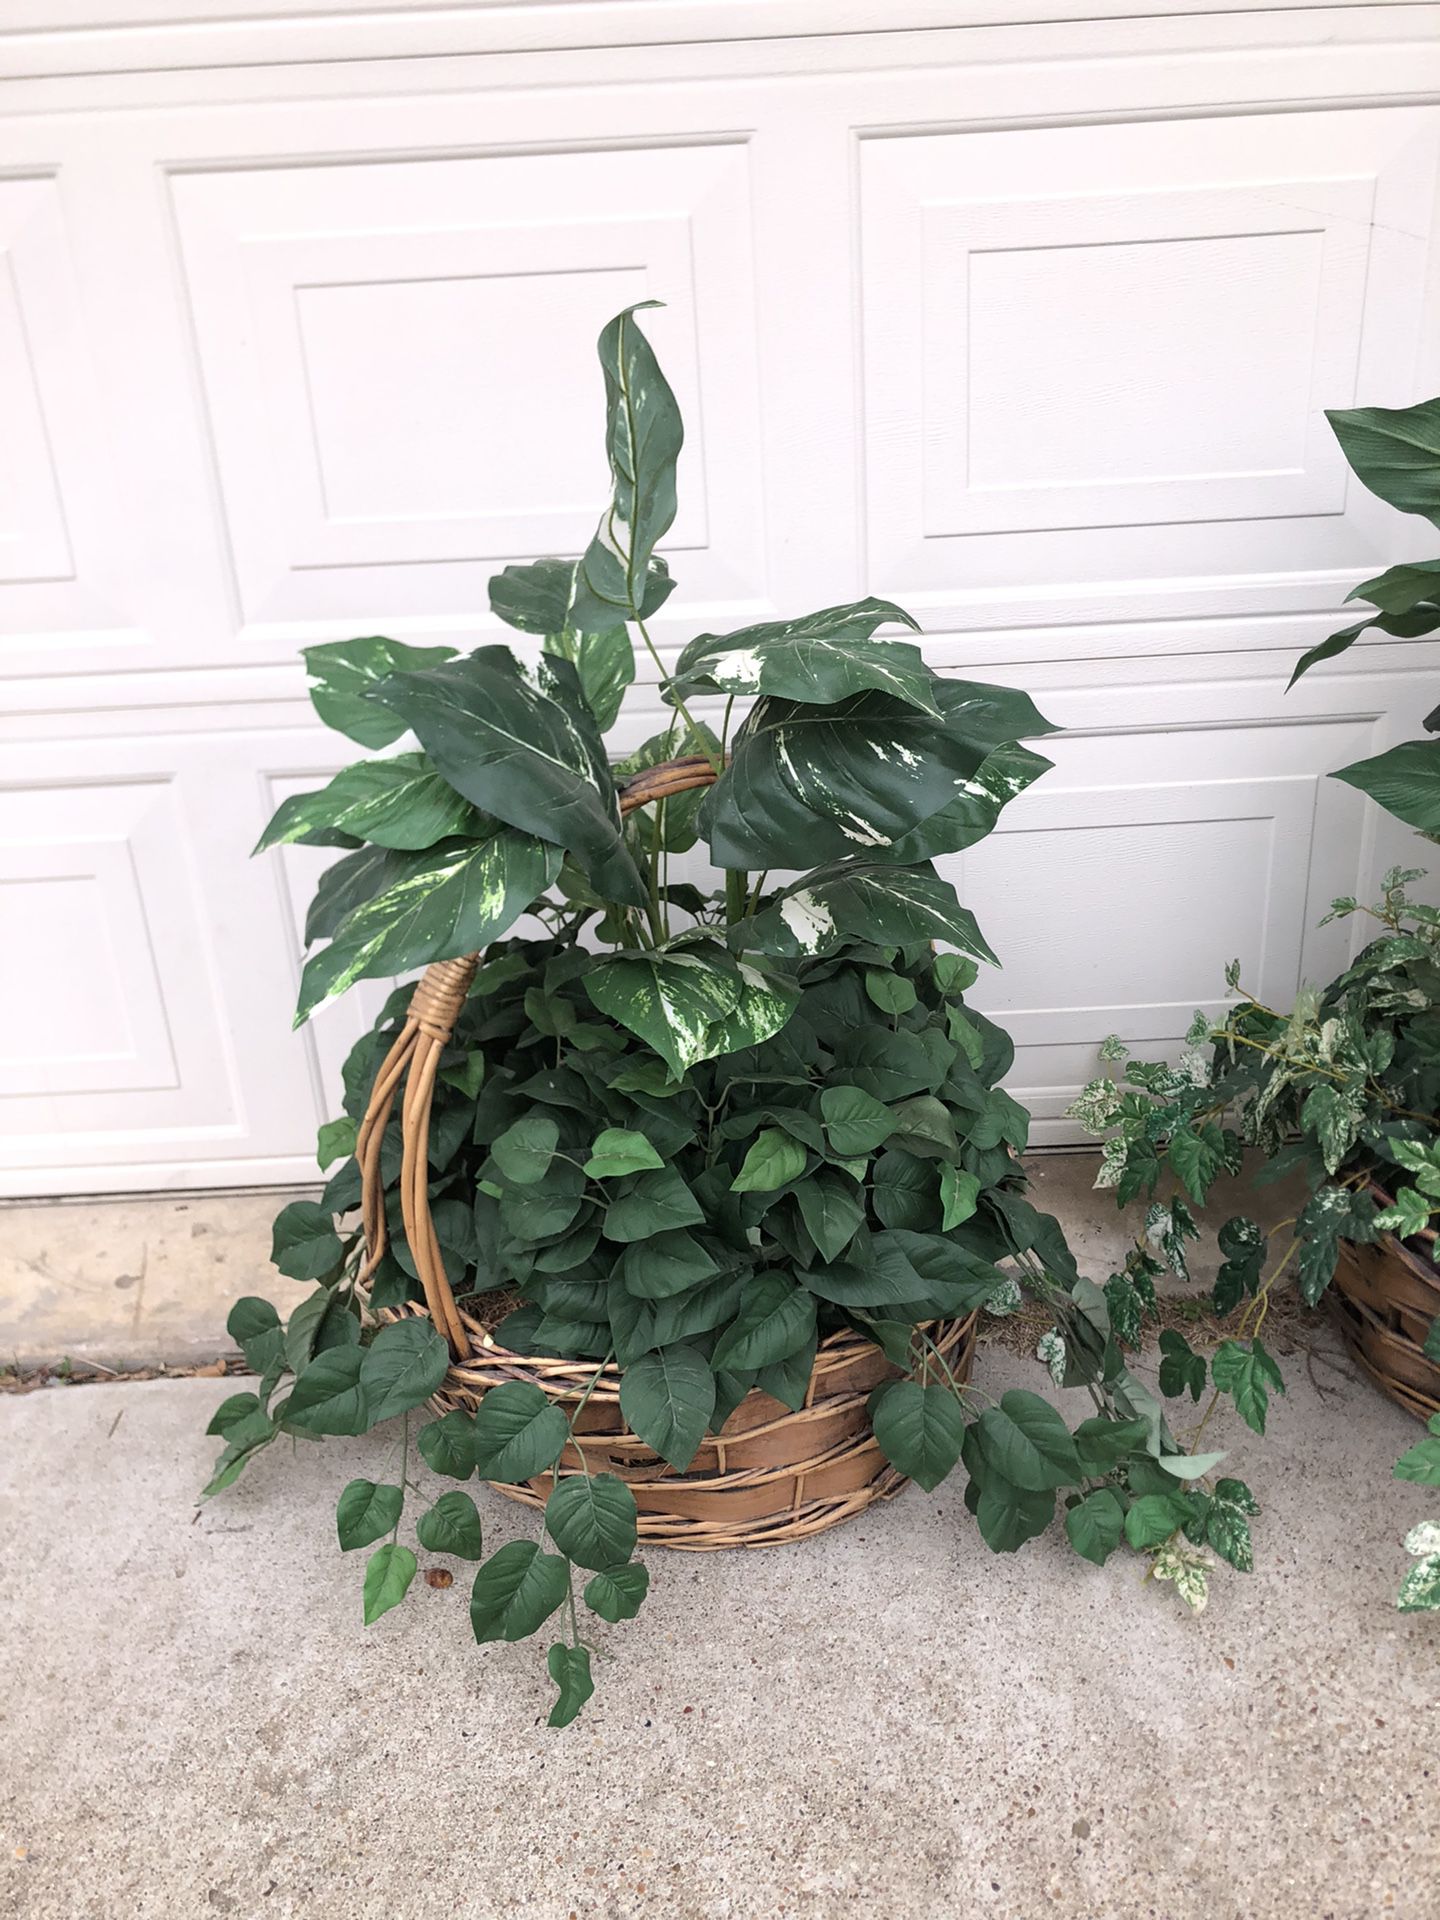 Large greenery baskets